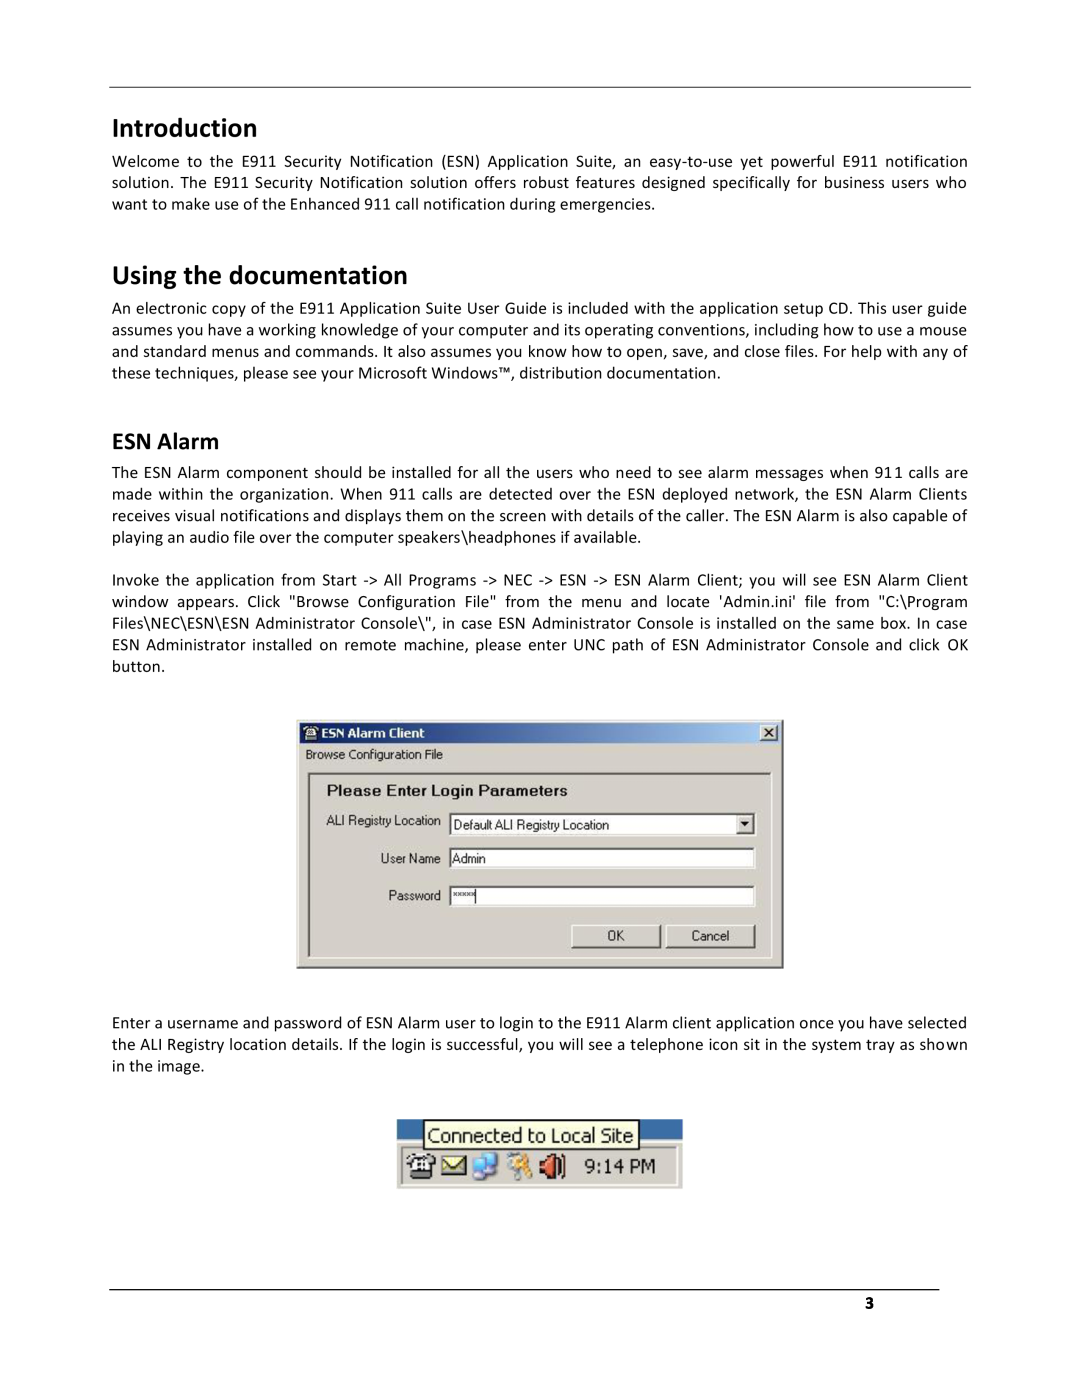 NEC SMB8000 manual Introduction, Using the documentation, ESN Alarm 